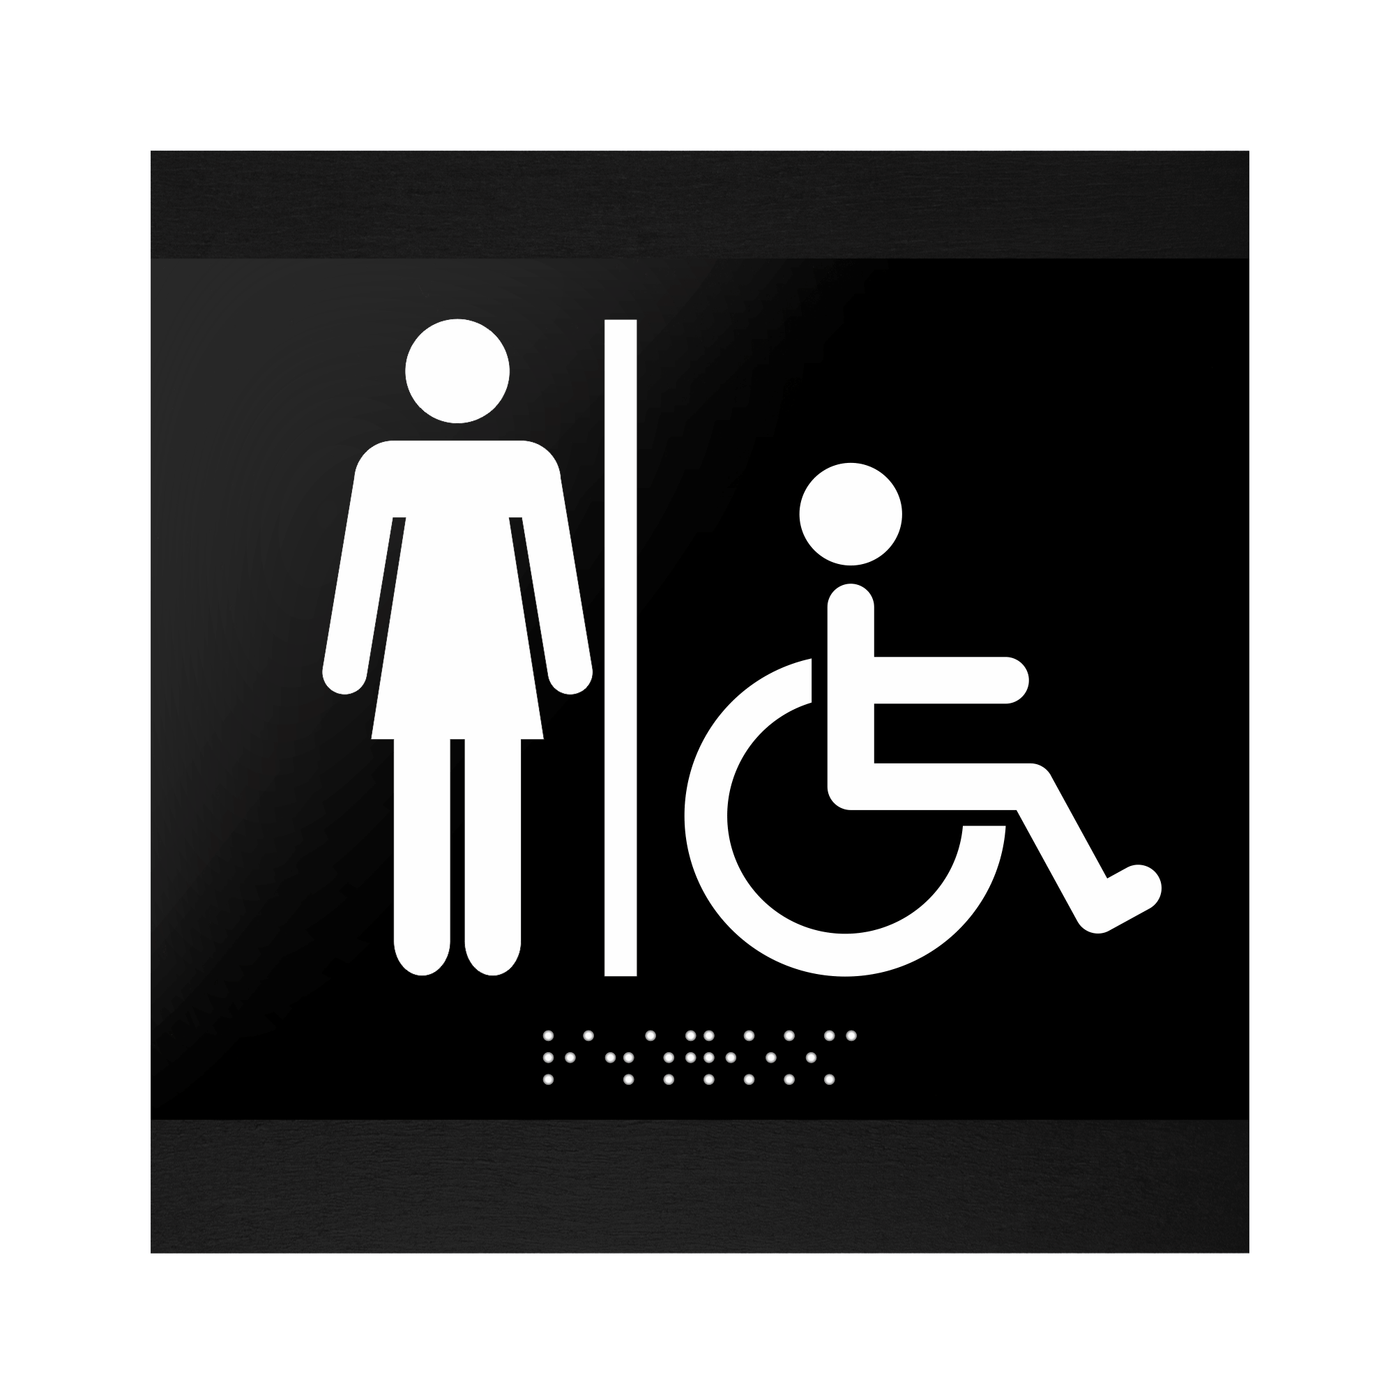 Restroom Sign for Women & Wheelchair - "Buro" Design